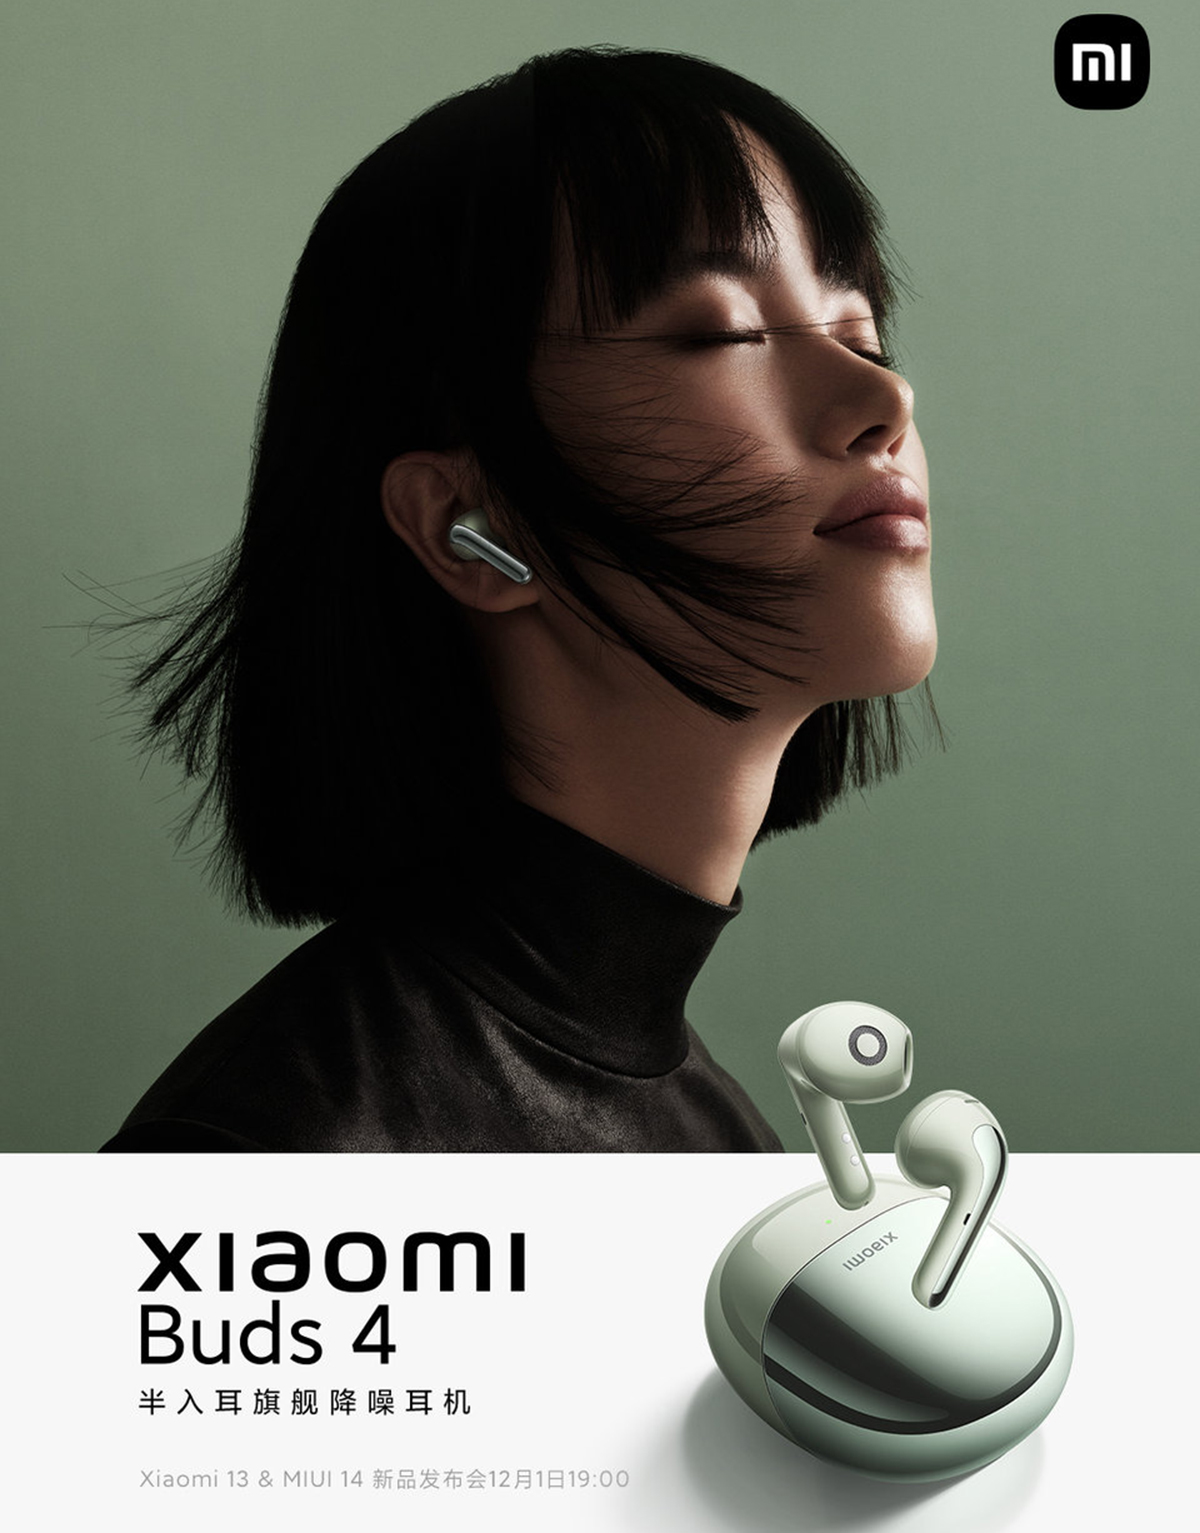 Xiaomi's new wireless headphones in a female user's phone